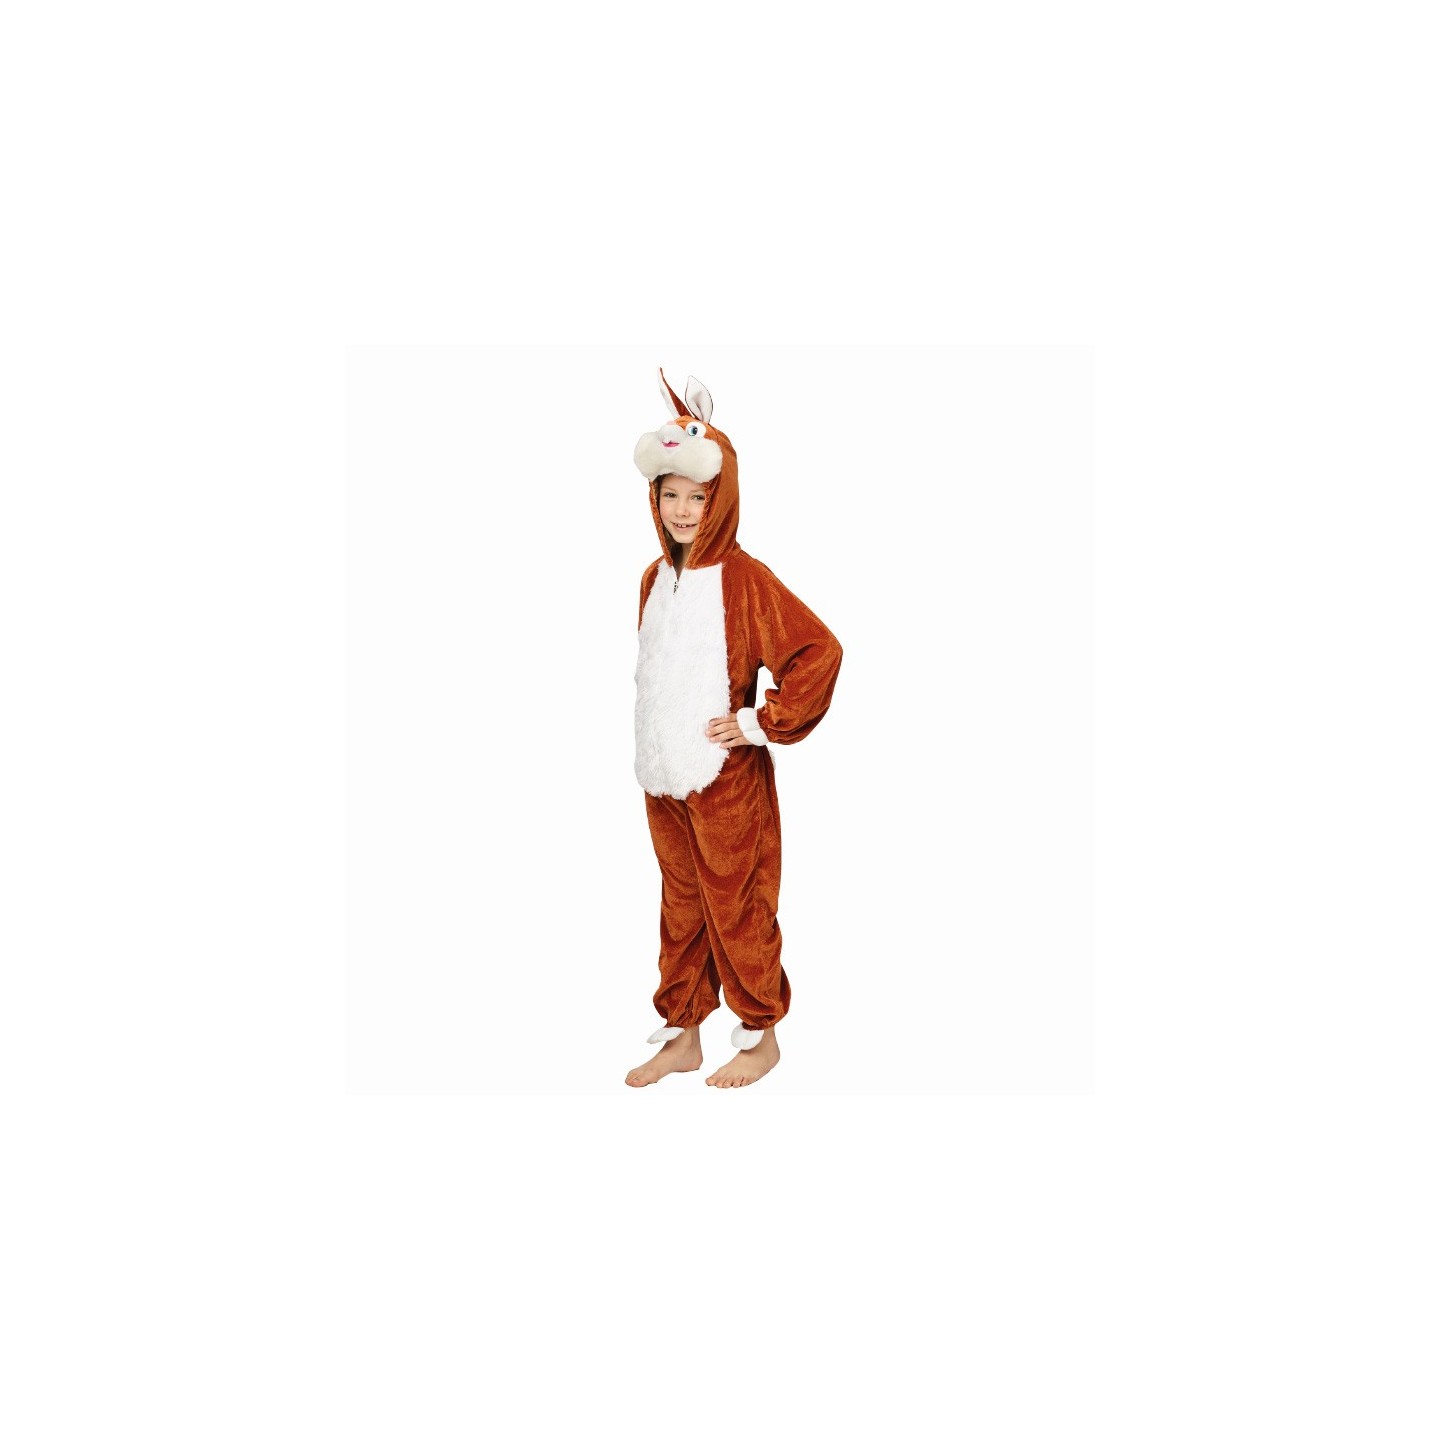 konijnen kostuum paashaaspak kind konijnenpakje carnaval